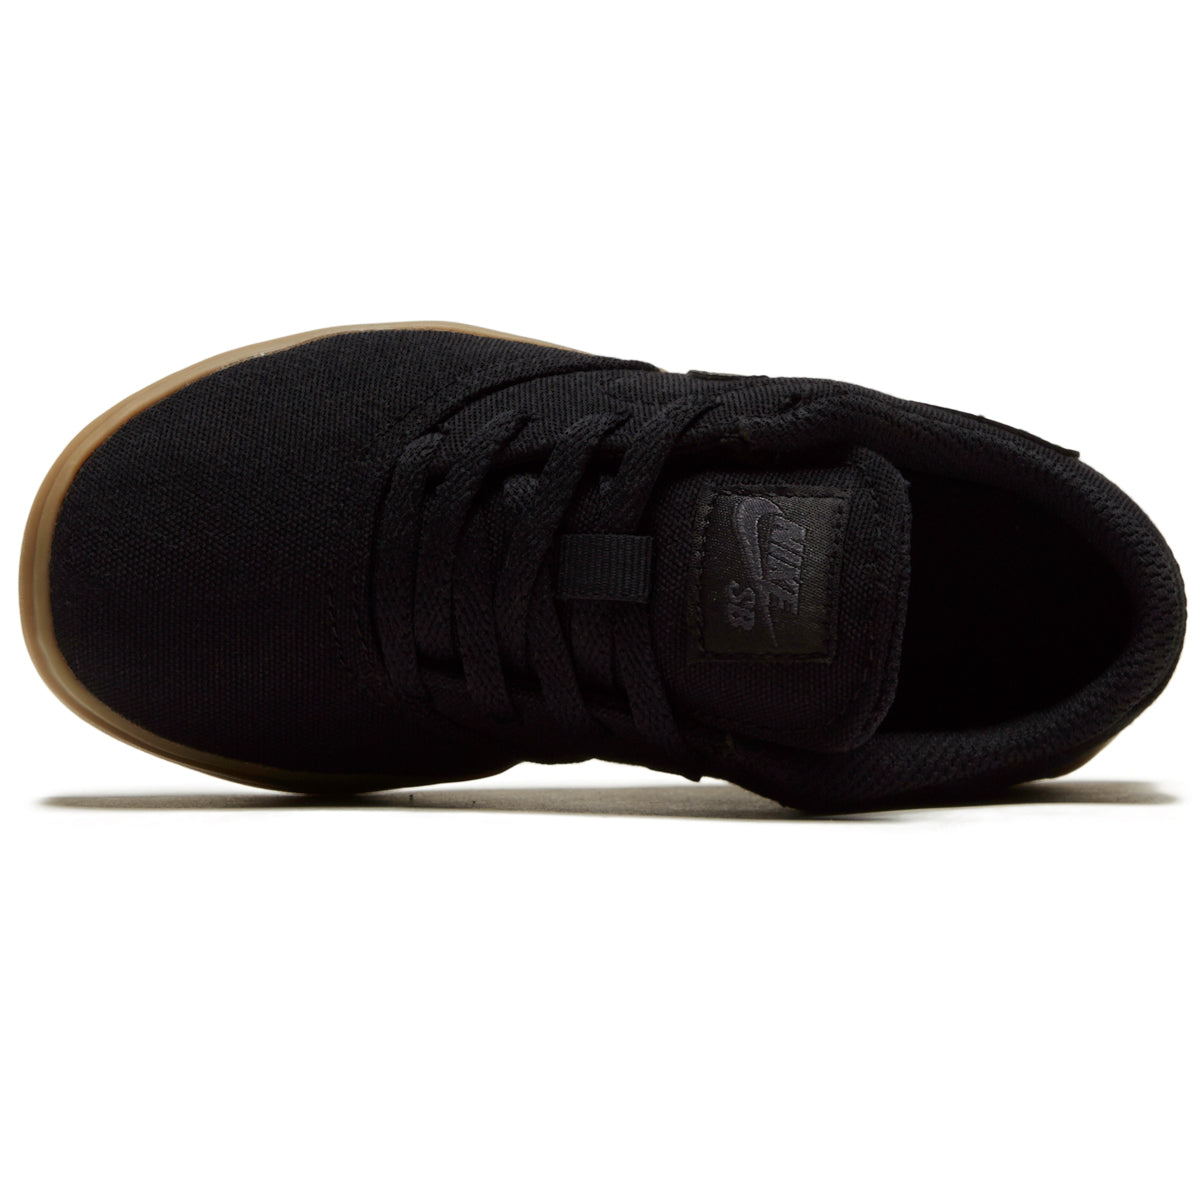 Nike SB Youth Check Canvas Shoes - Black/Black/Gum Light Brown image 3